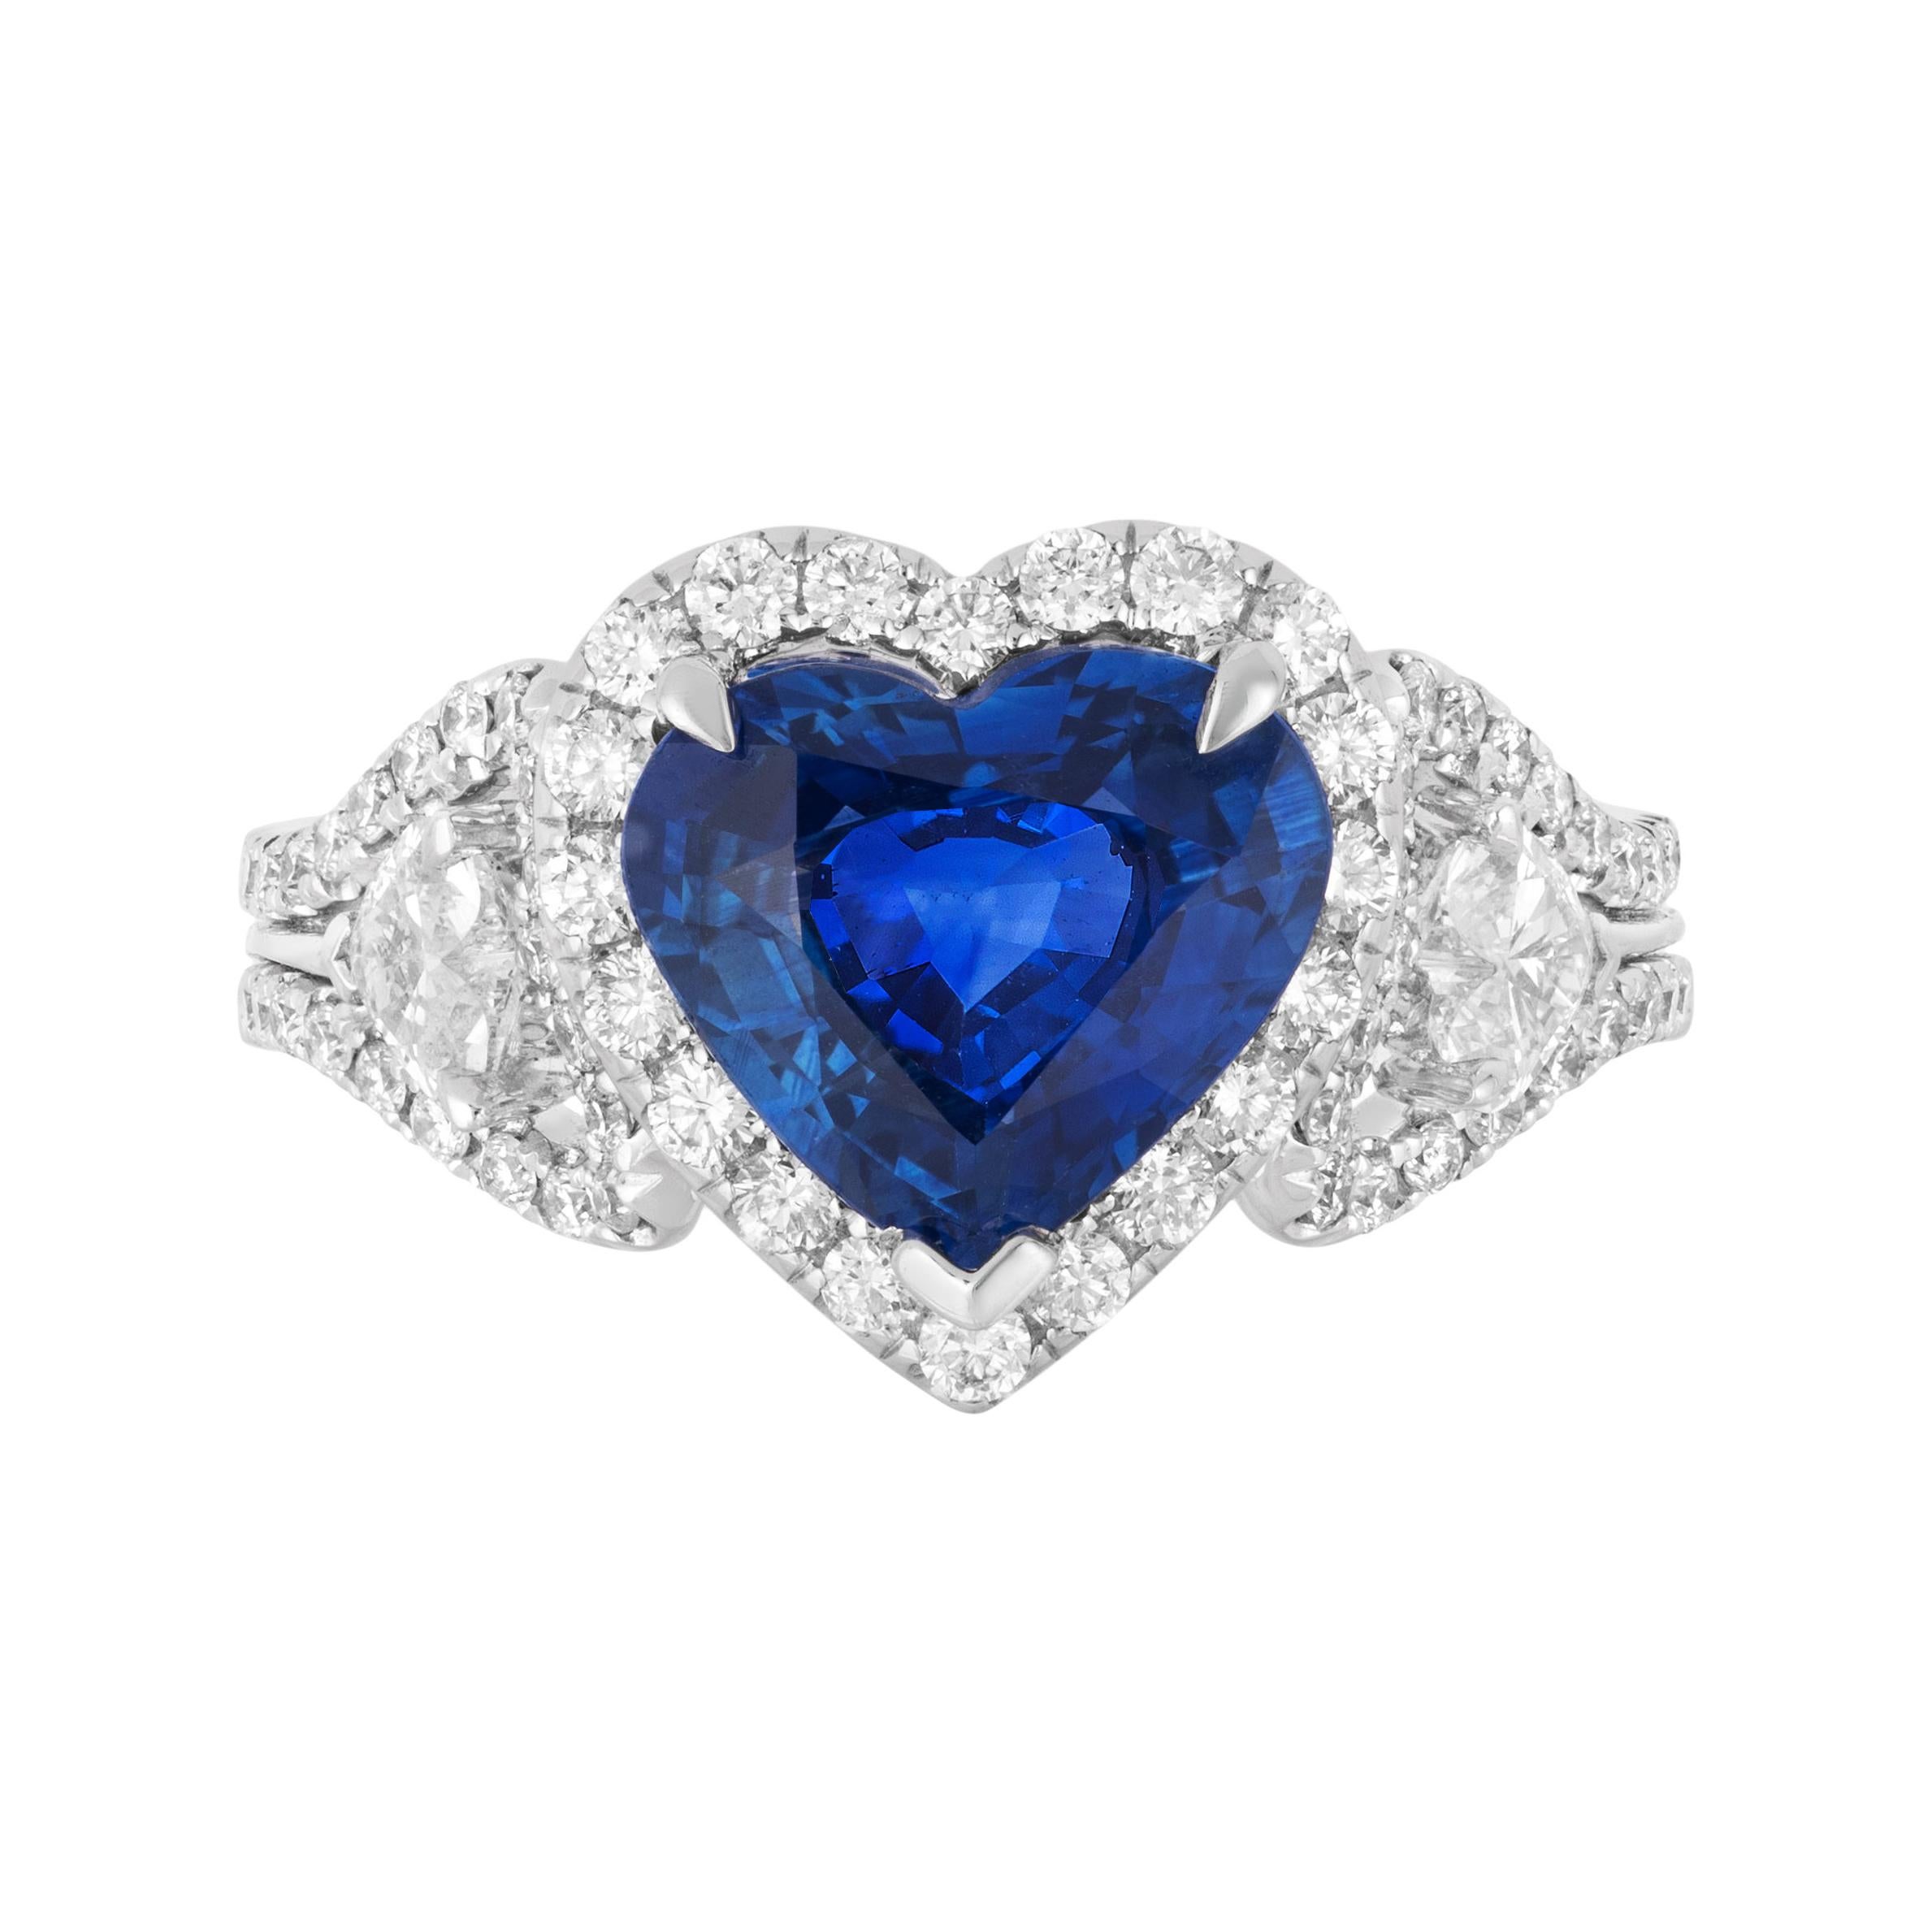 Andreoli CDC Certified 2.60 Carat Ceylon Blue Sapphire Diamond Heart Shape Ring